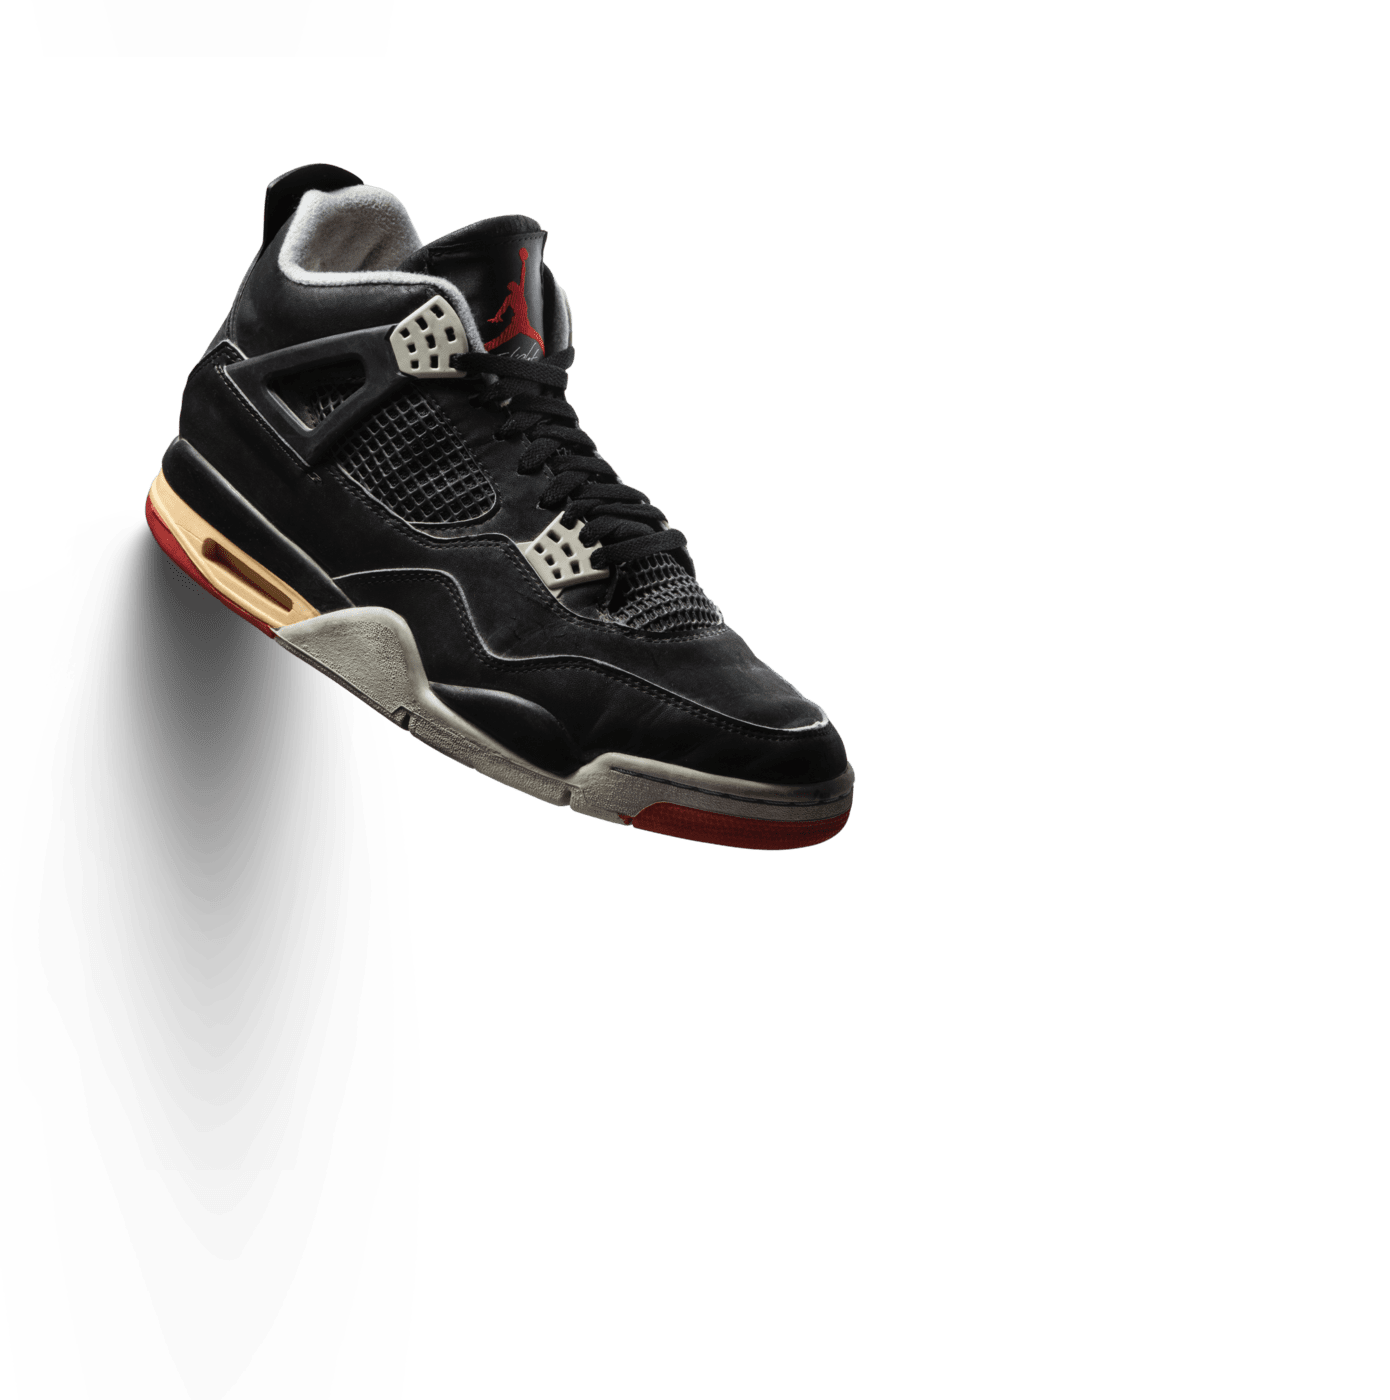 Air Jordan Collection: Retro & New Editions. Jordan.com